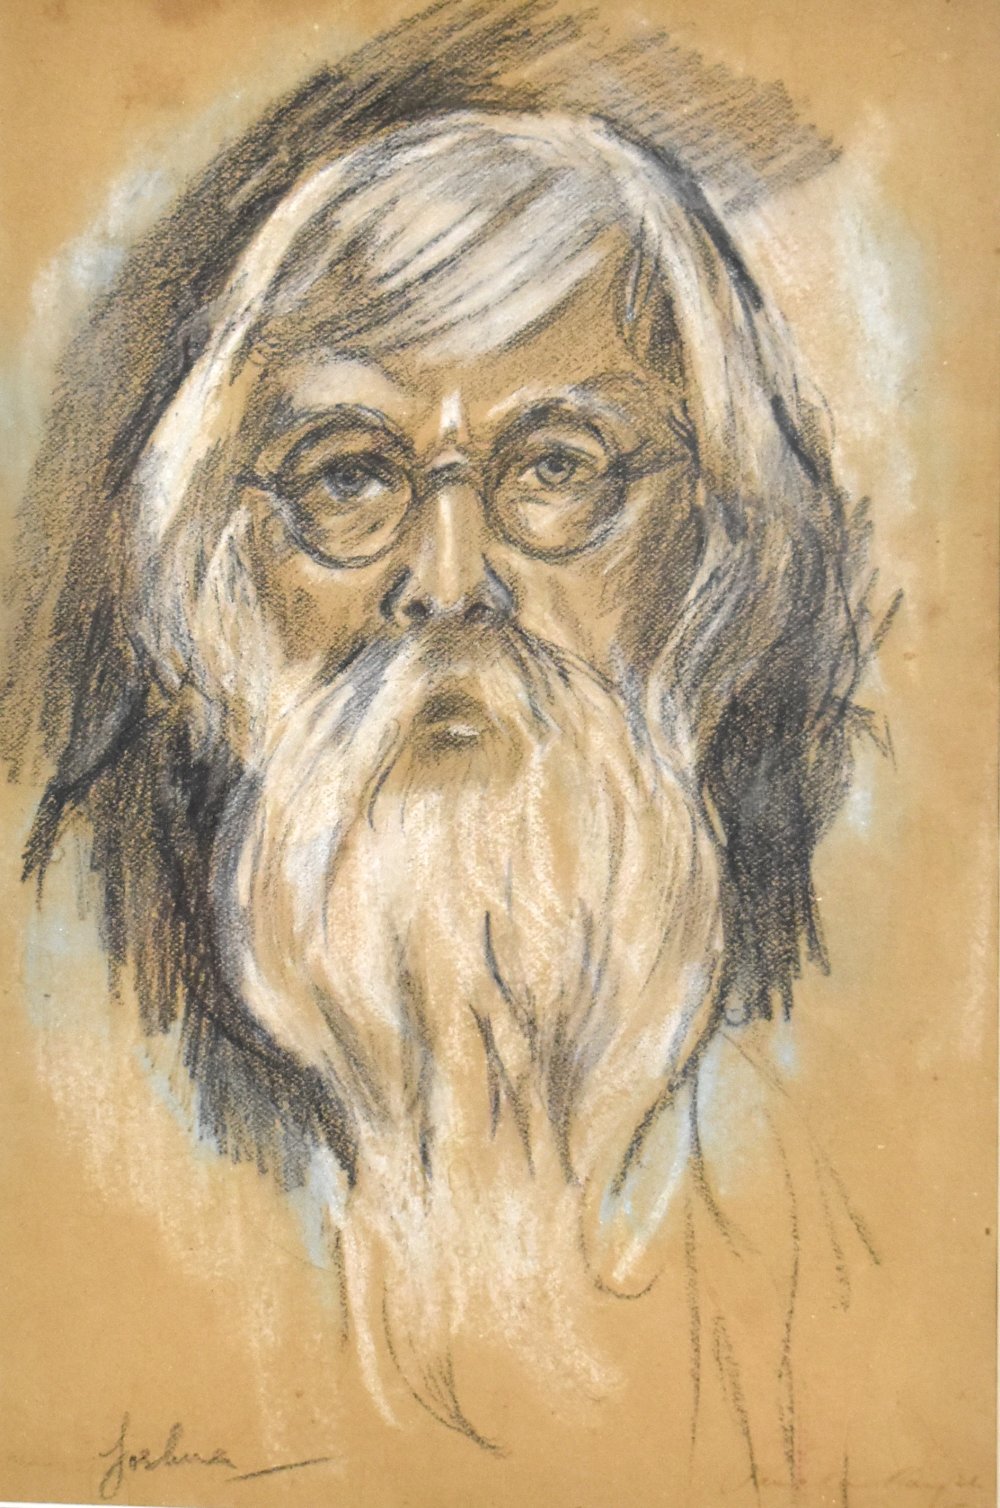 UNATTRIBUTED; pastel sketch, bearded gentleman wearing glasses, inscribed 'Joshua' lower left with